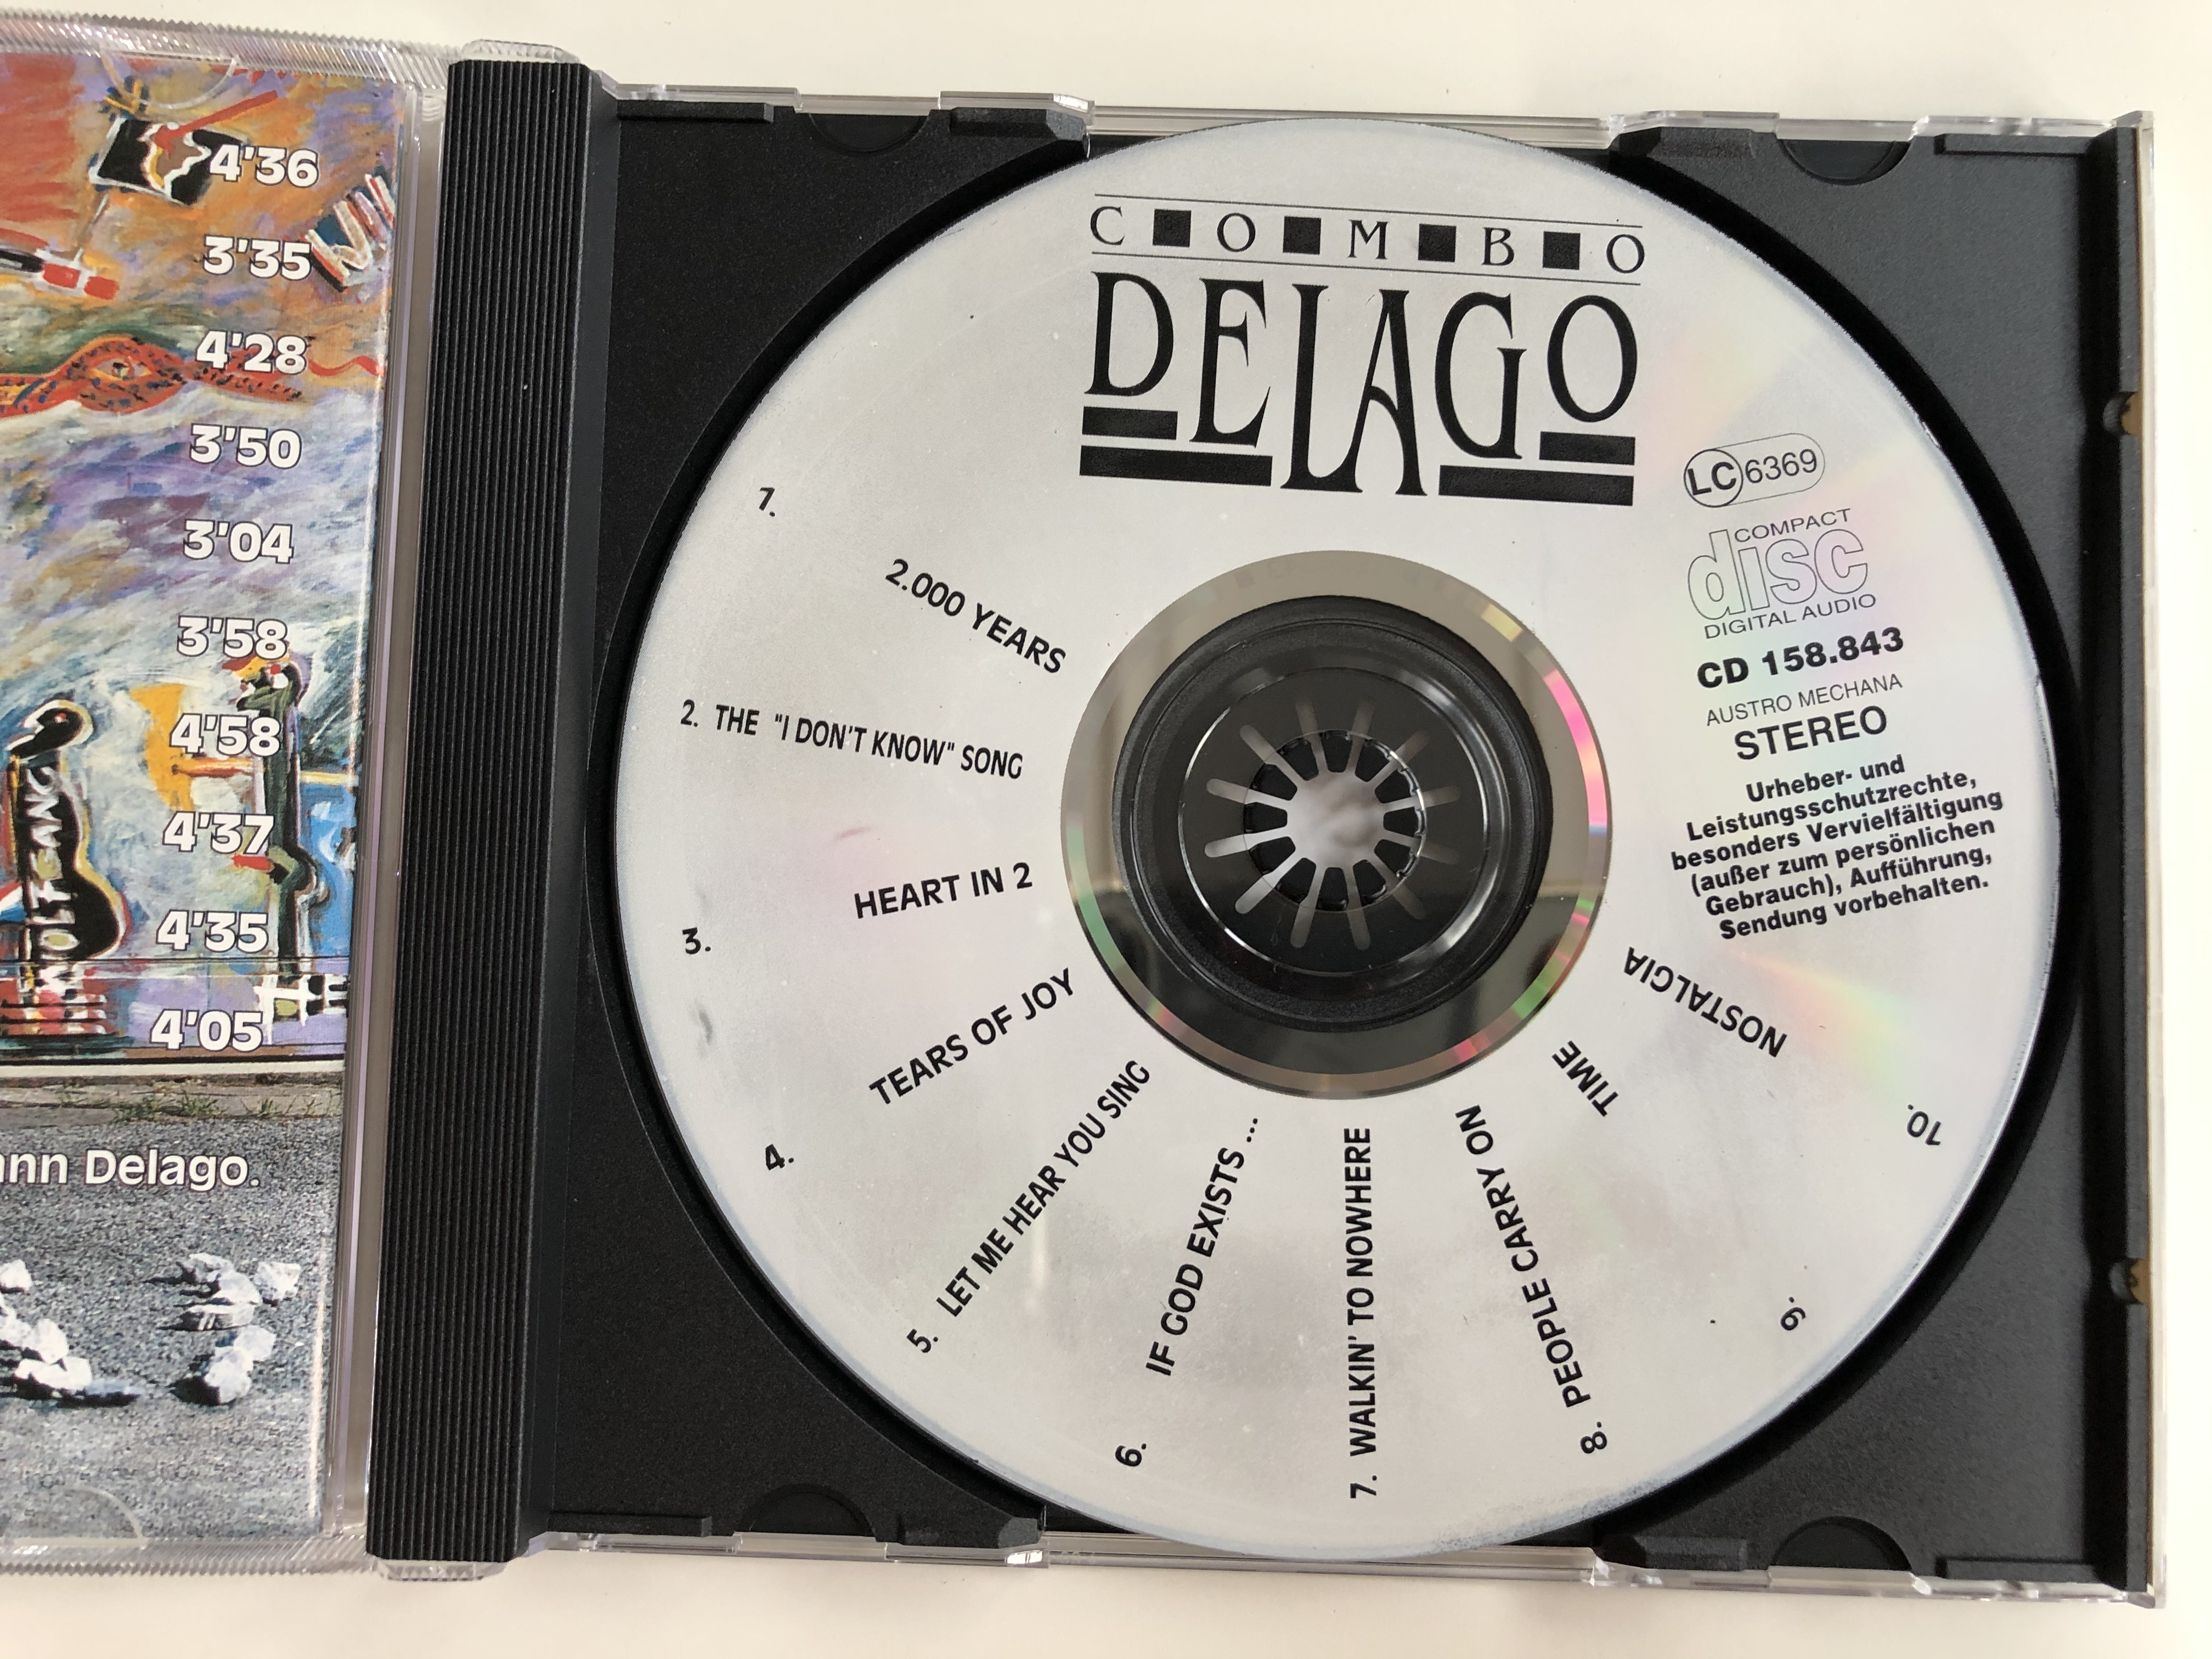 combo-delago-2000-years-mcp-records-audio-cd-stereo-cd-158-3-.jpg